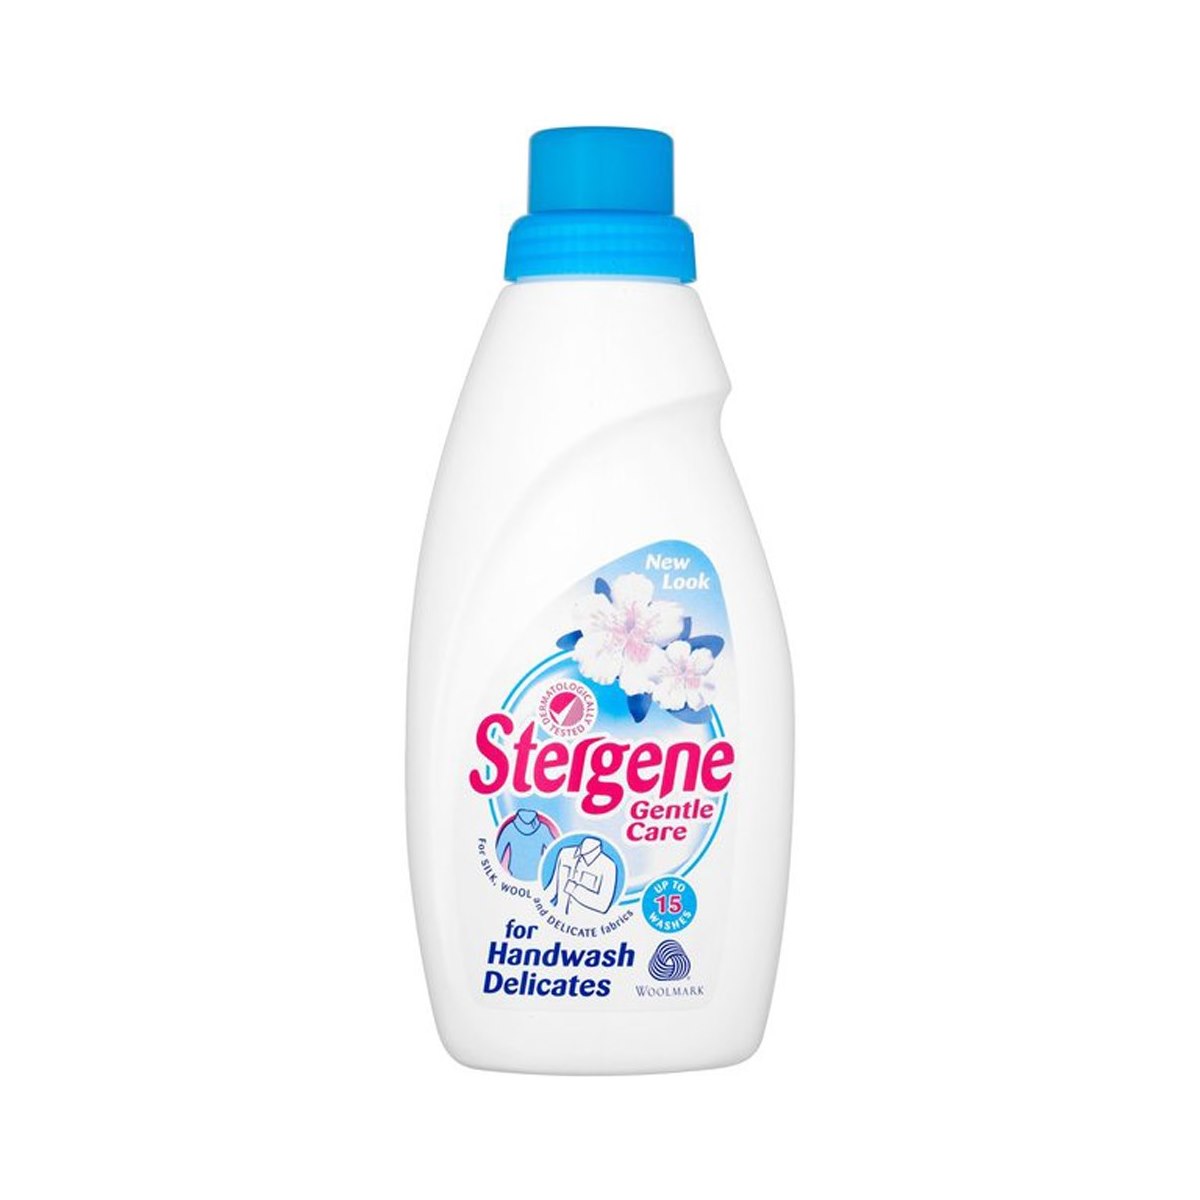 Stergene Gentle Care Handwash for Delicates 500ml